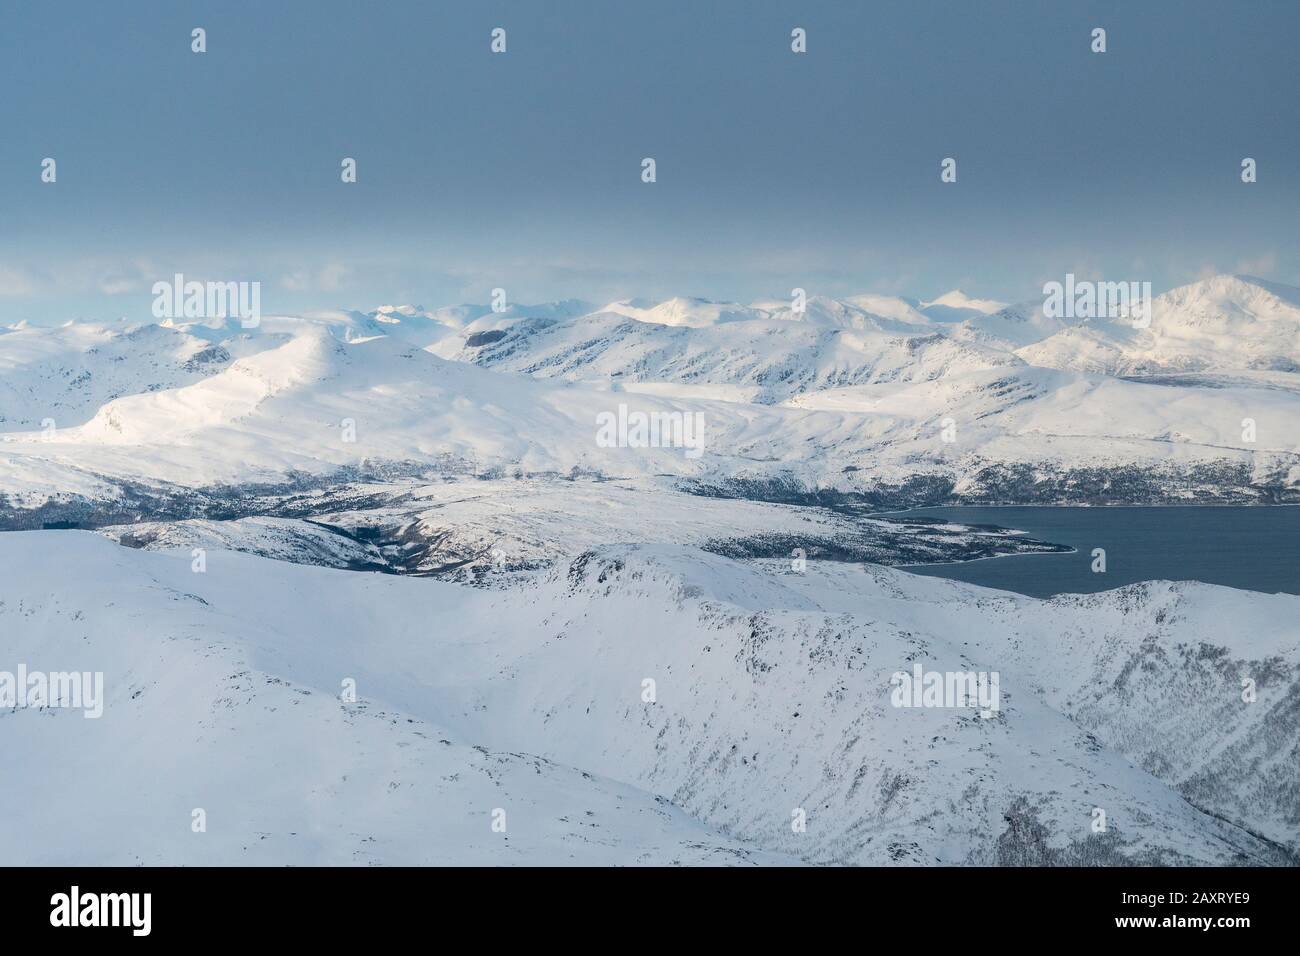 Escandinavia, paisaje nevado de invierno desde arriba Foto de stock